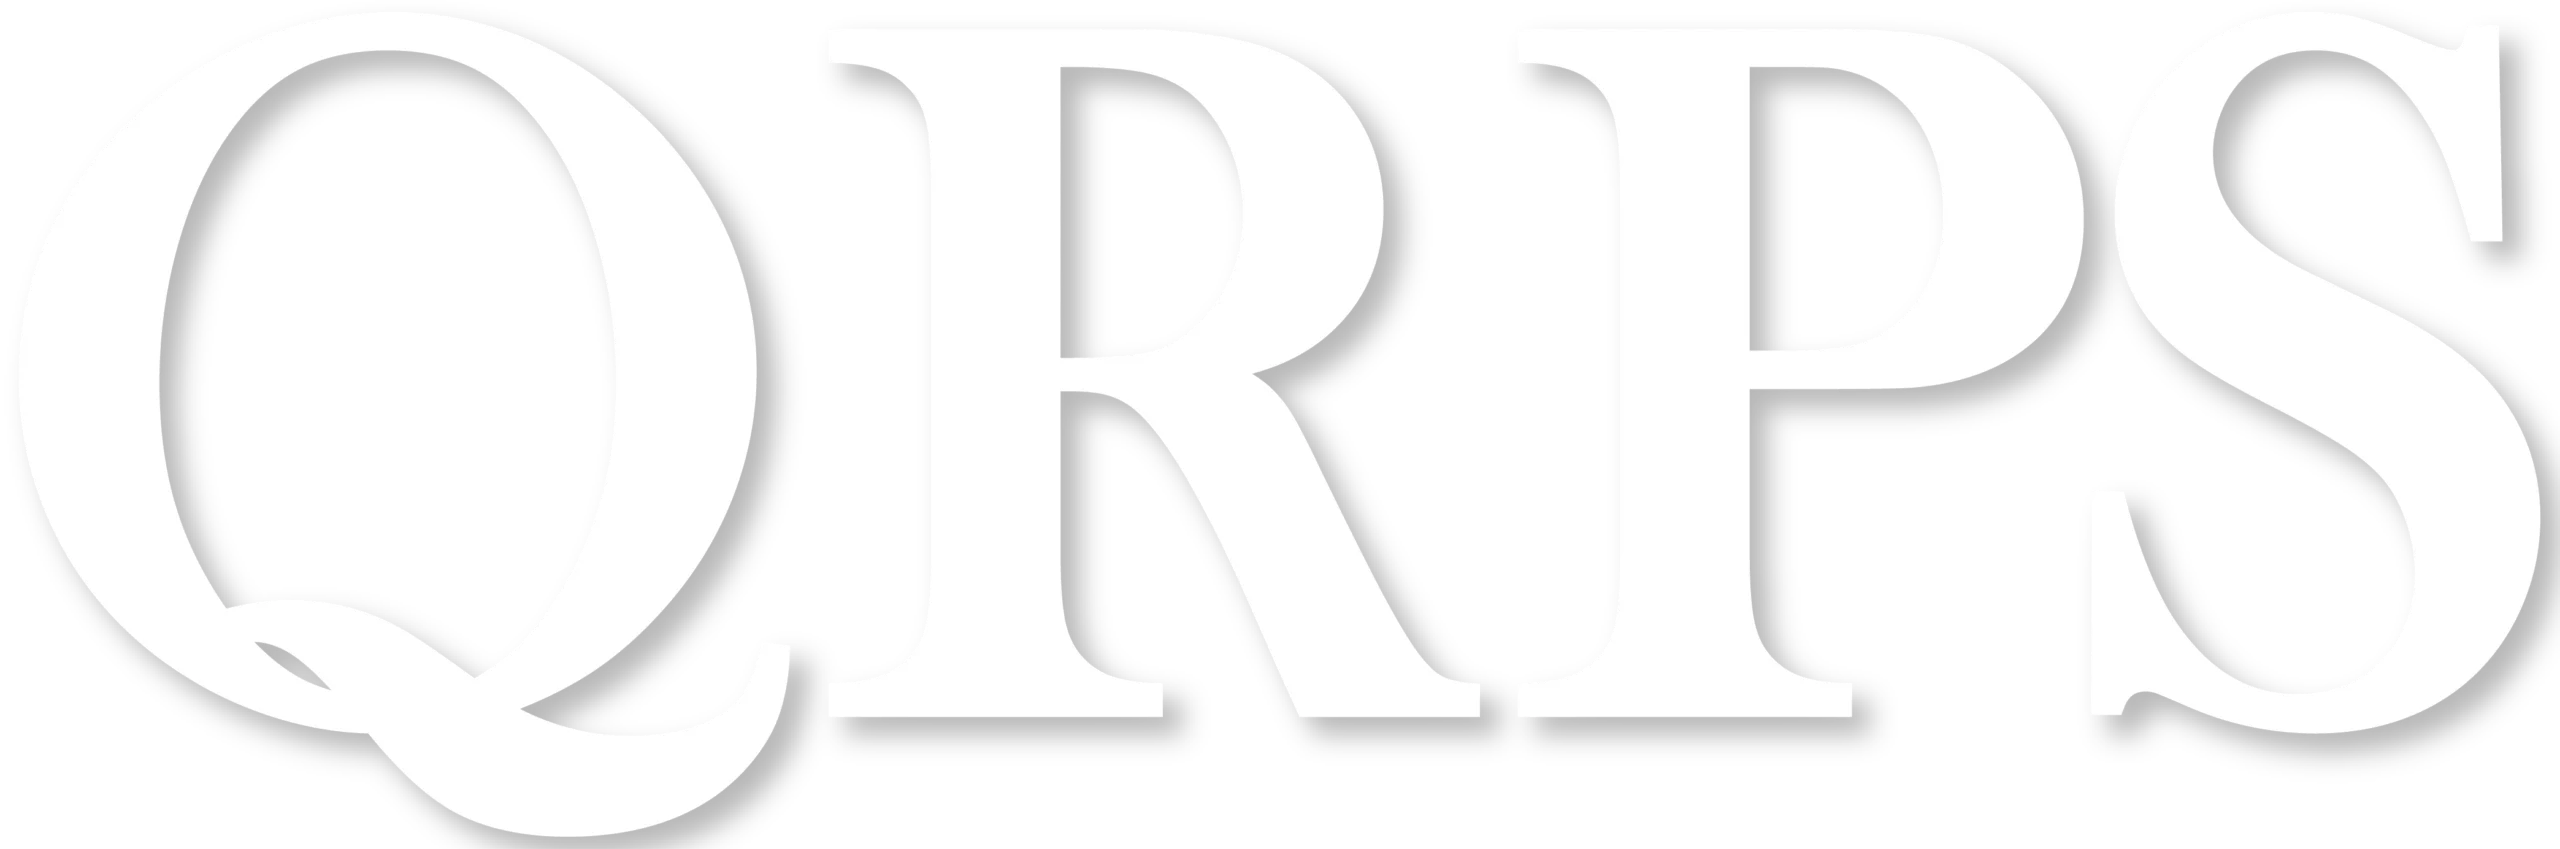 QRPS Logo white